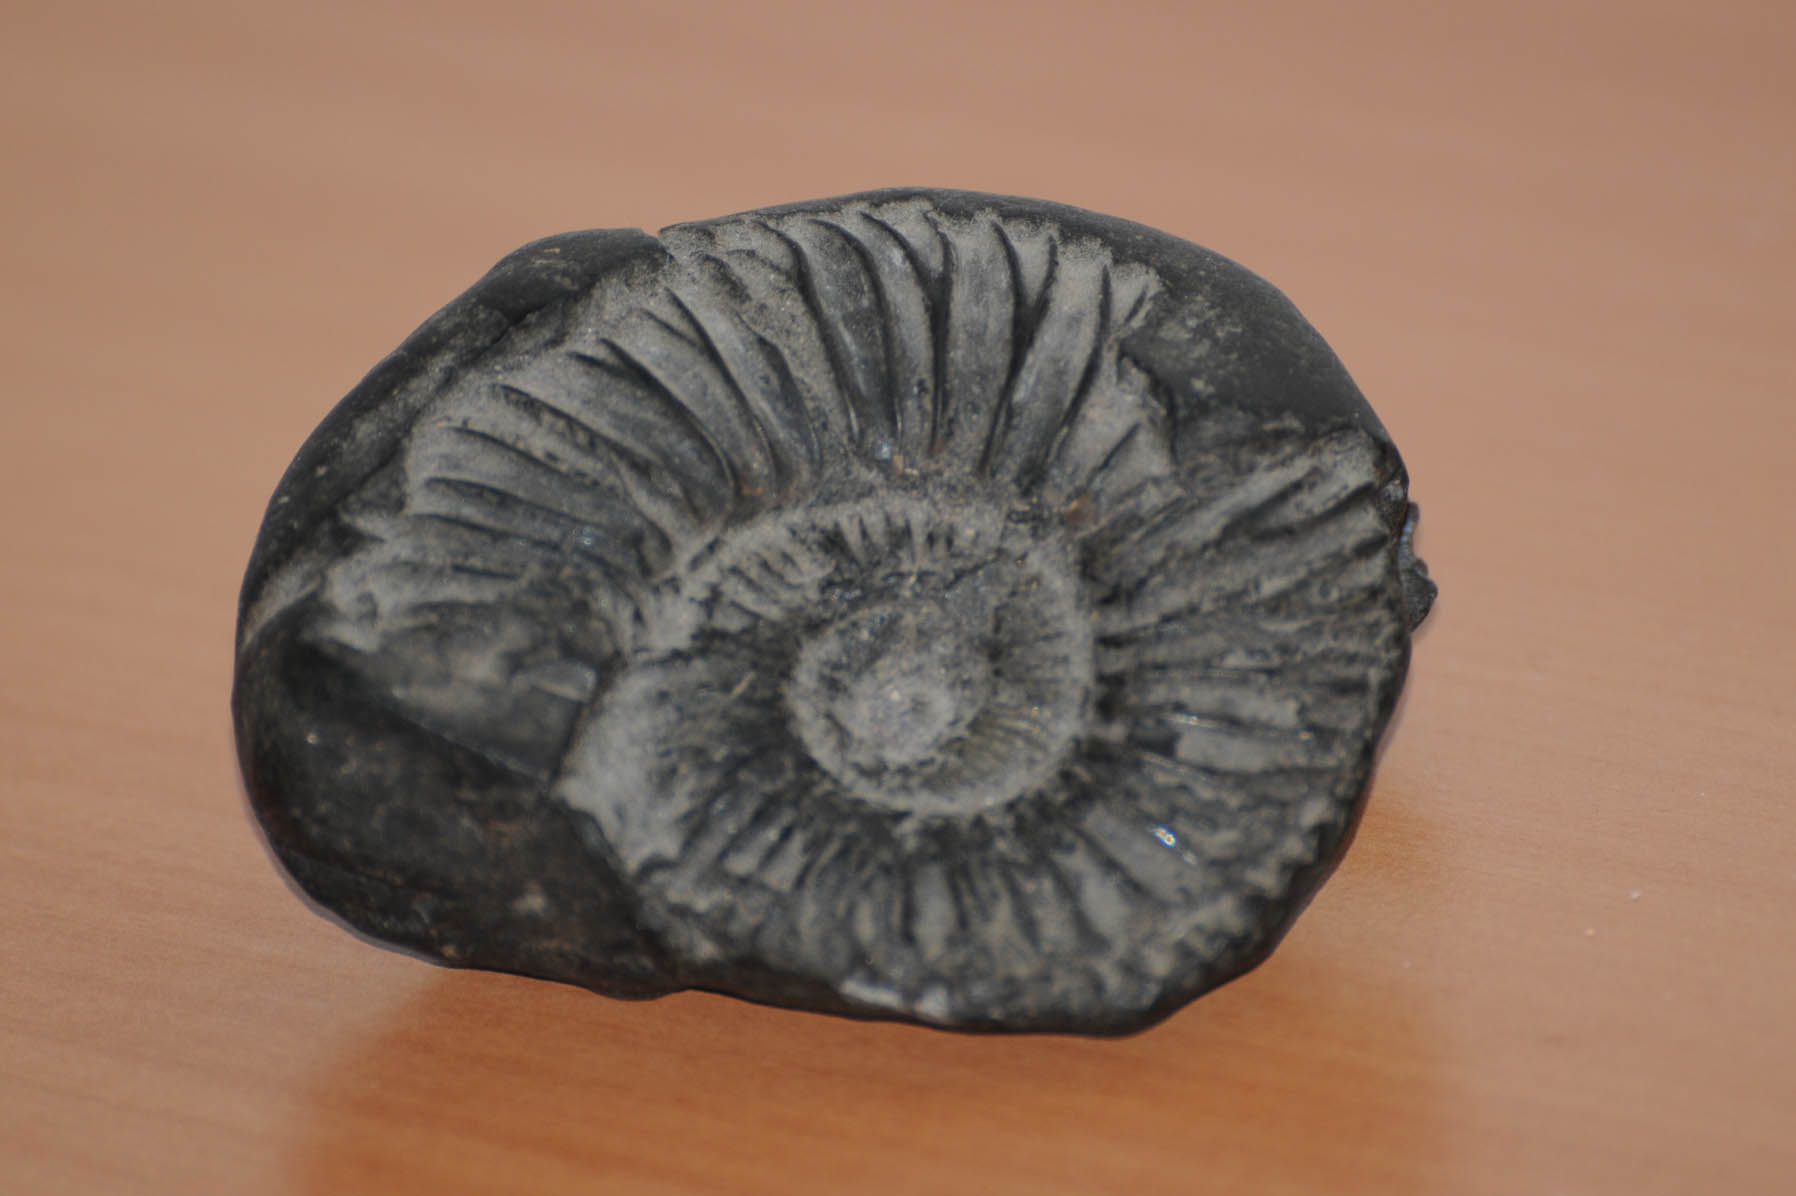 Nome: Ammonite / Luogo: India